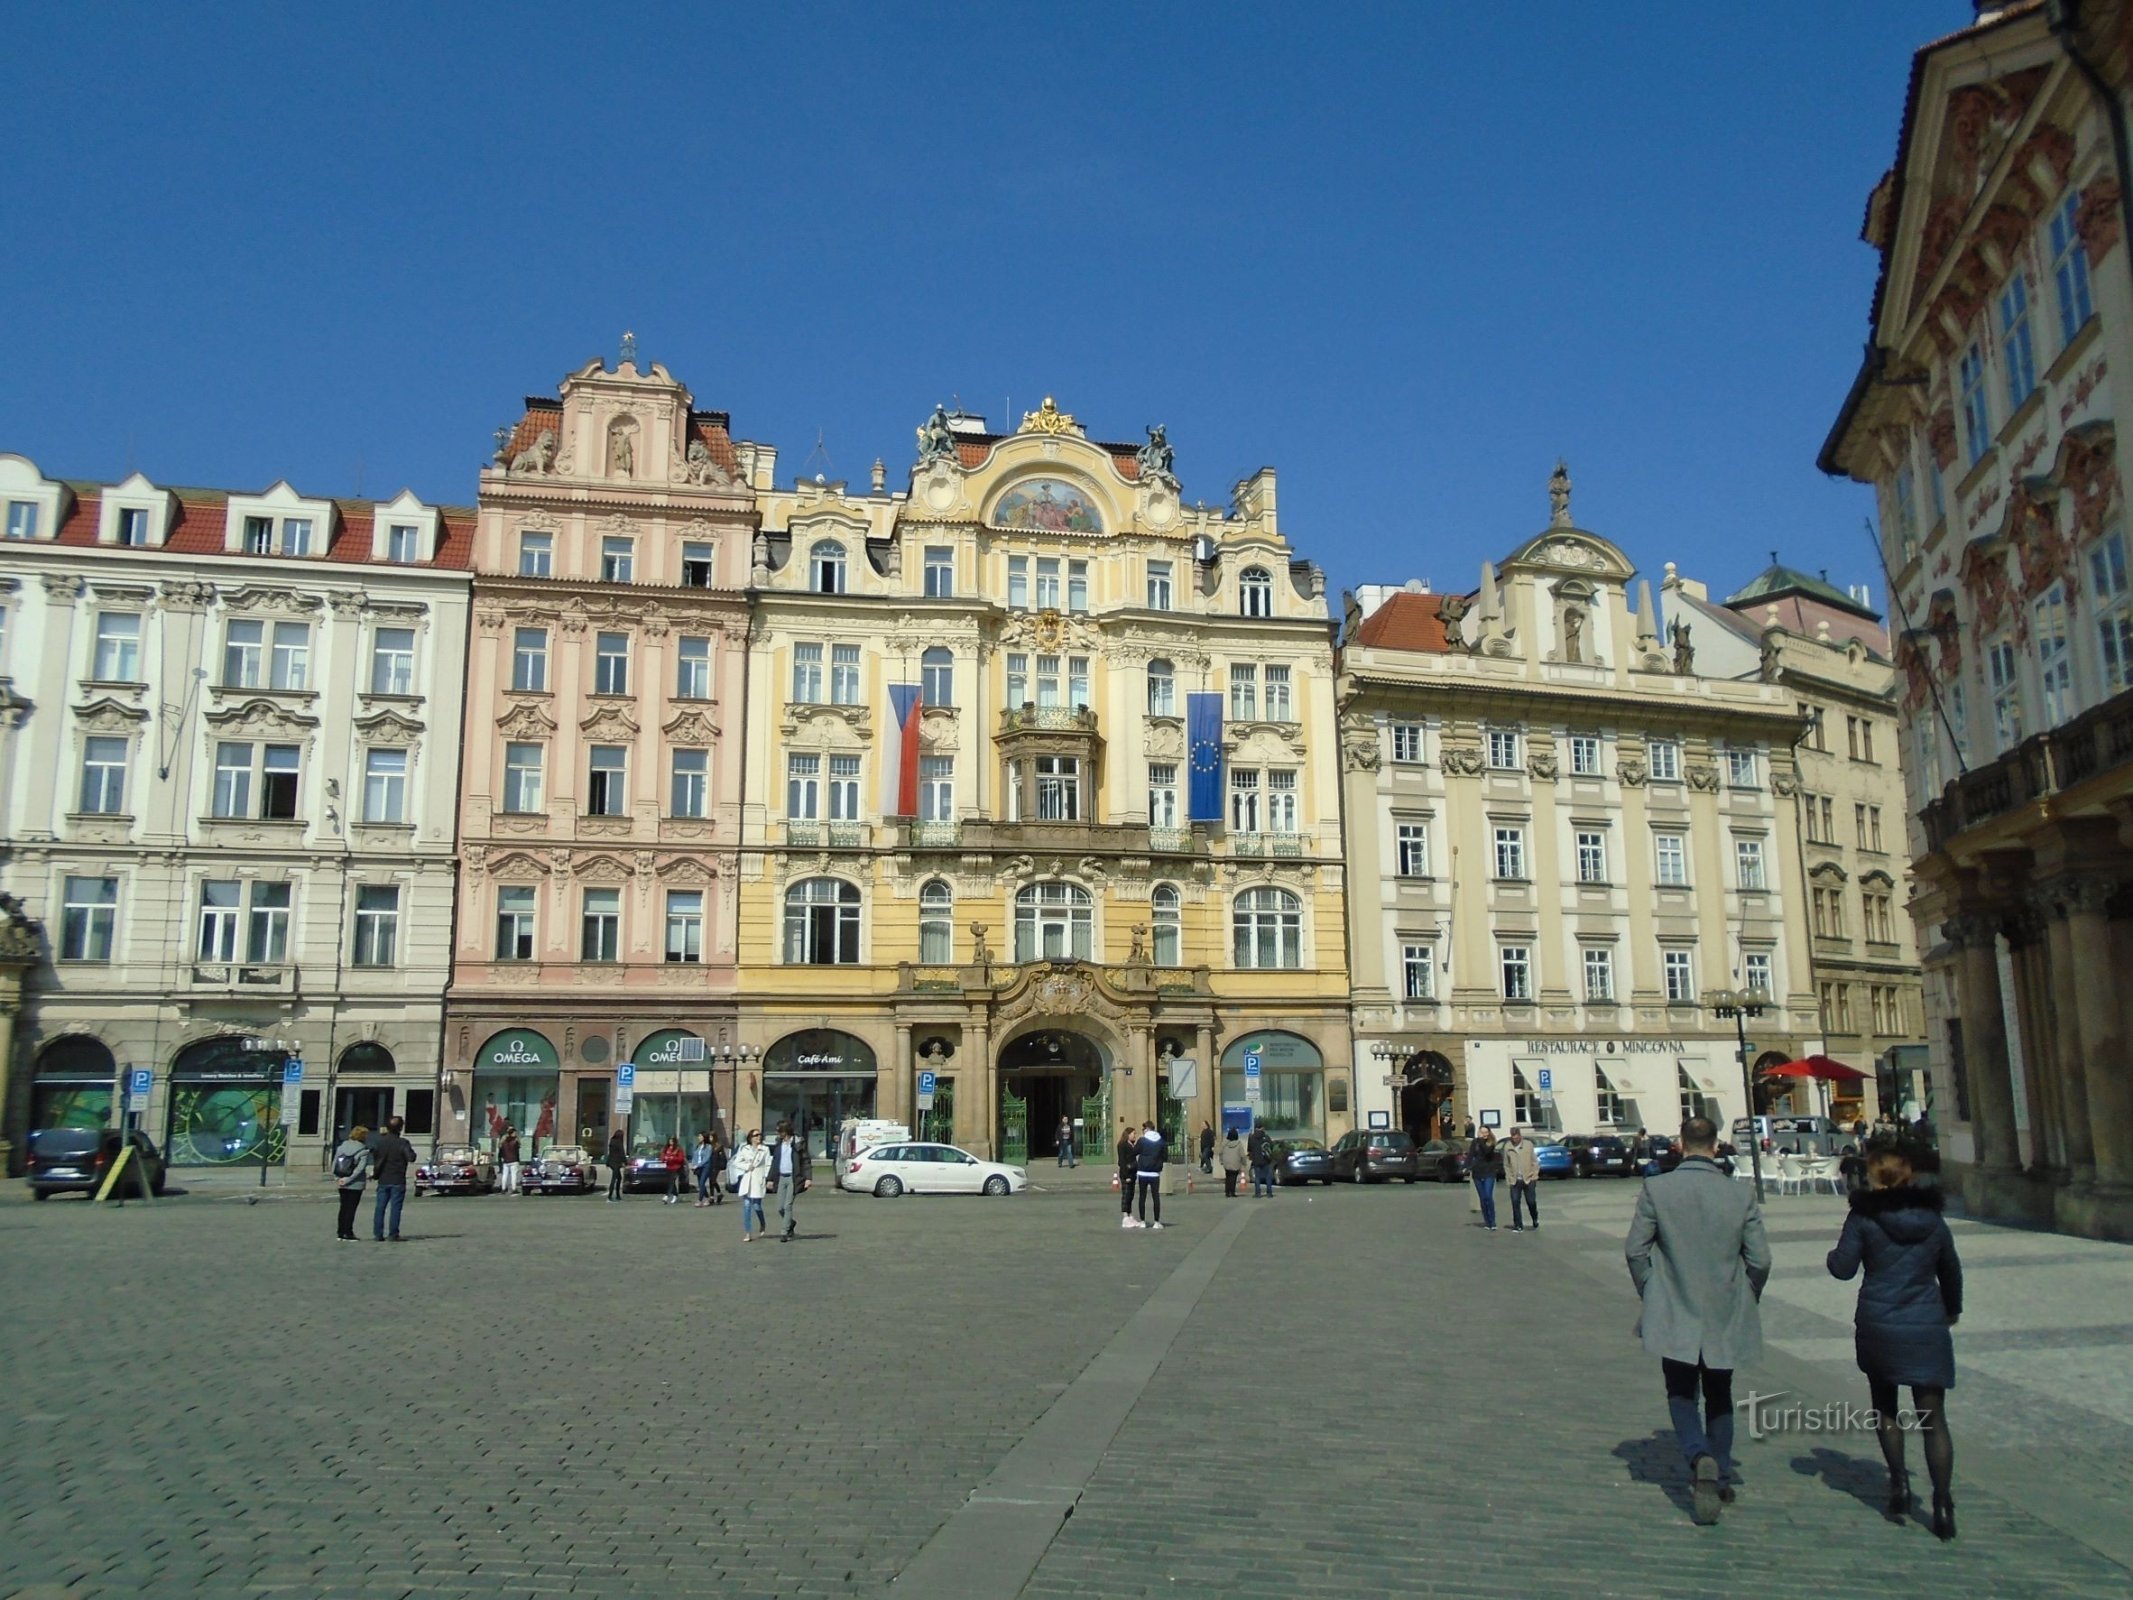 Old Town Square No. 932 (Prag, 1.4.2019. april XNUMX)